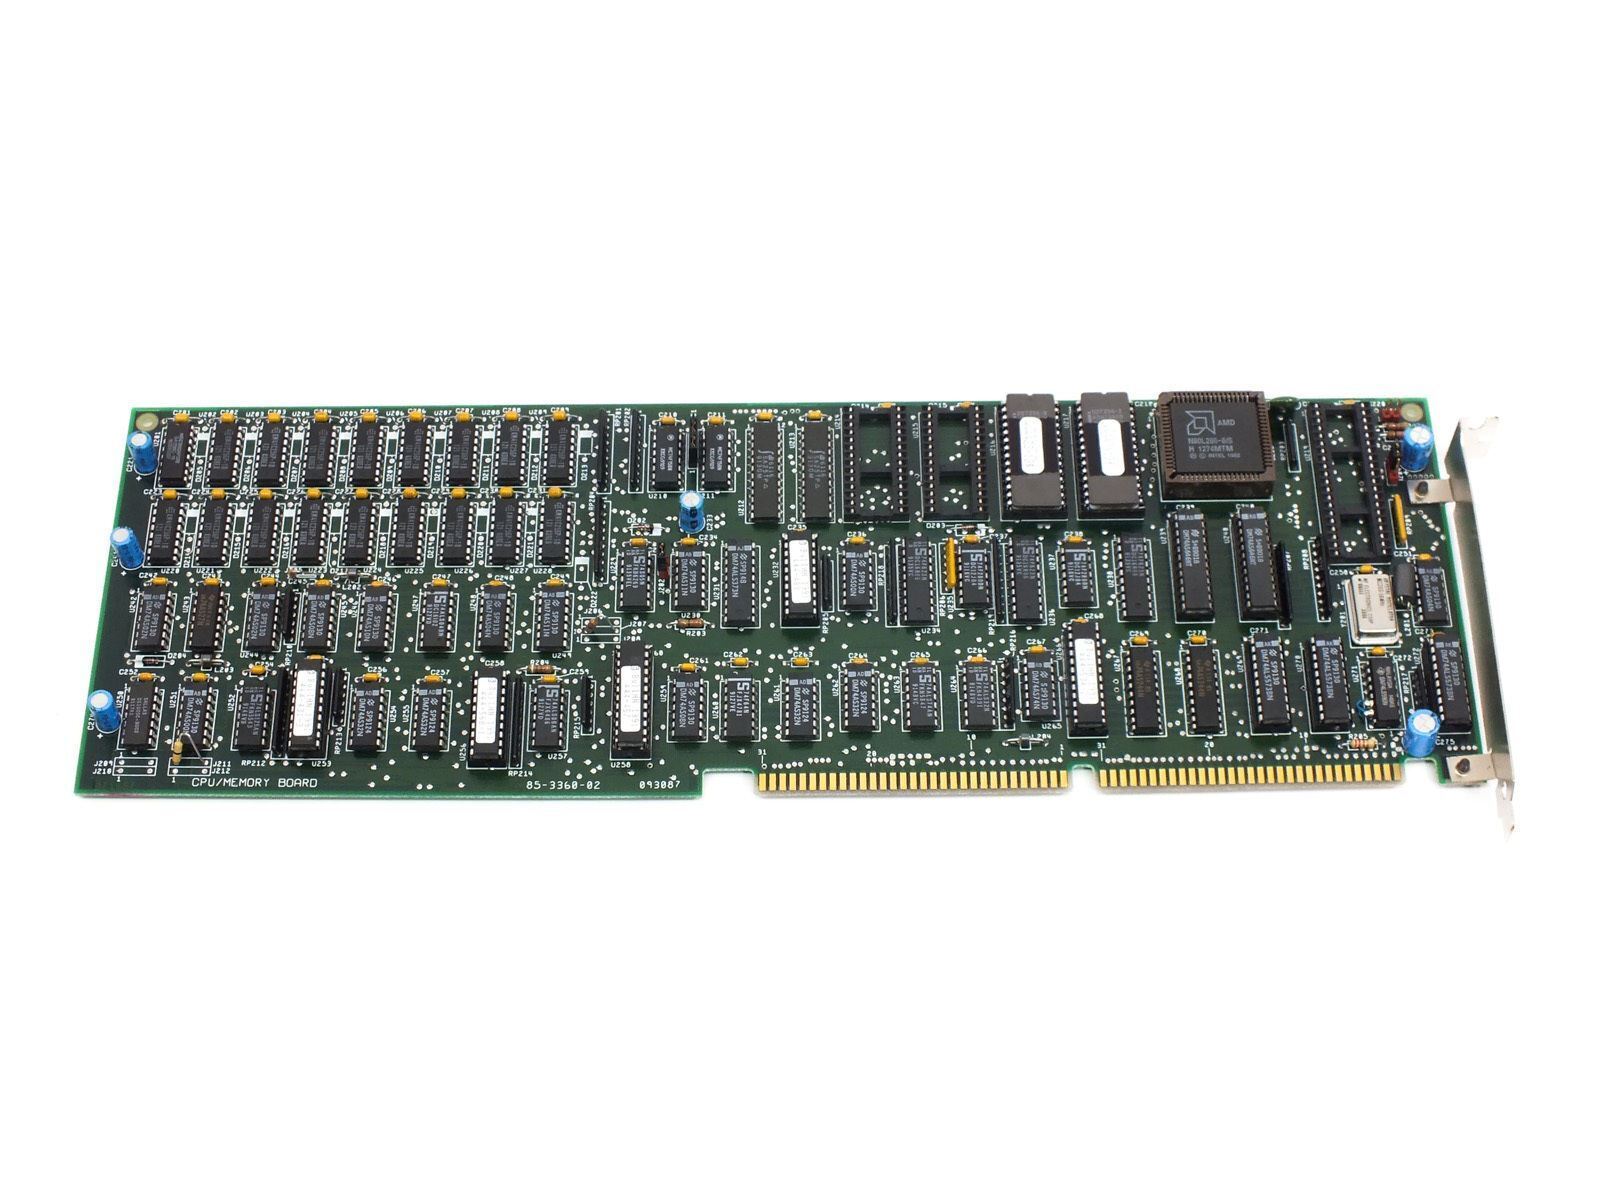 Zenith 85-3360-02 VINTAGE CPU / Memory Expansion Board / Card SBR204 181-6116-3M